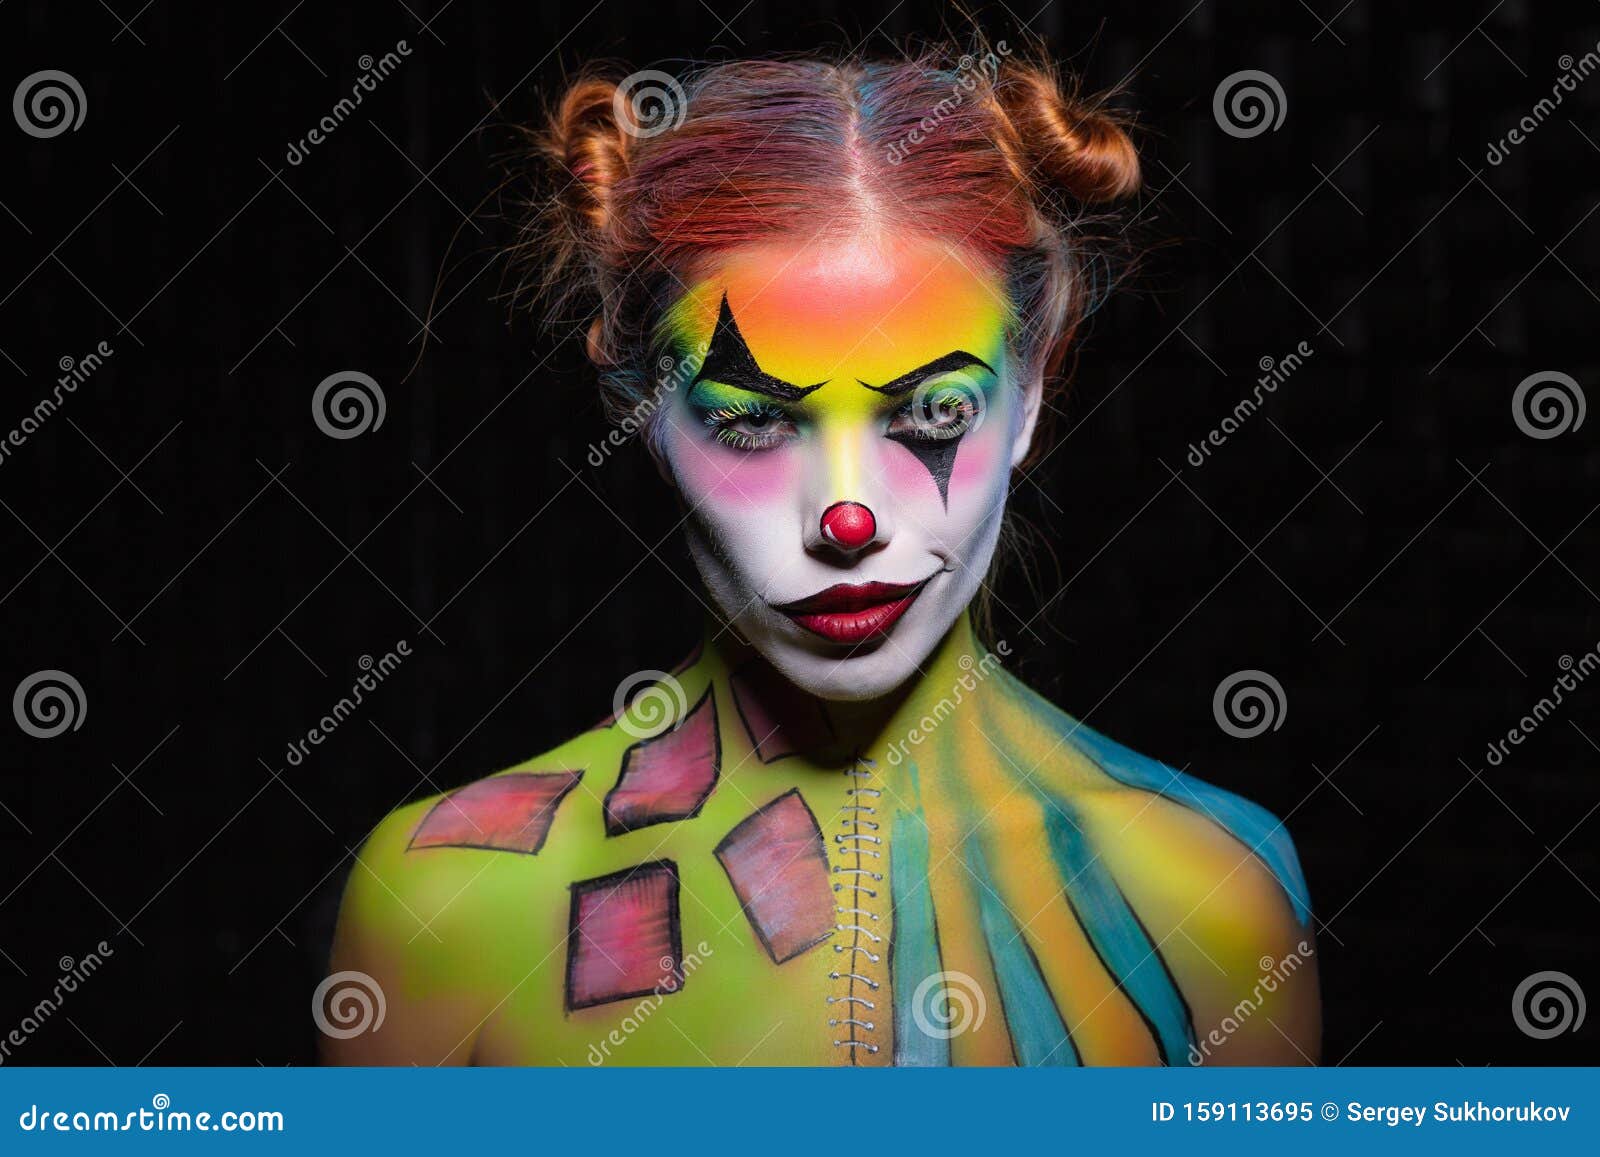 hot sexy girl clown